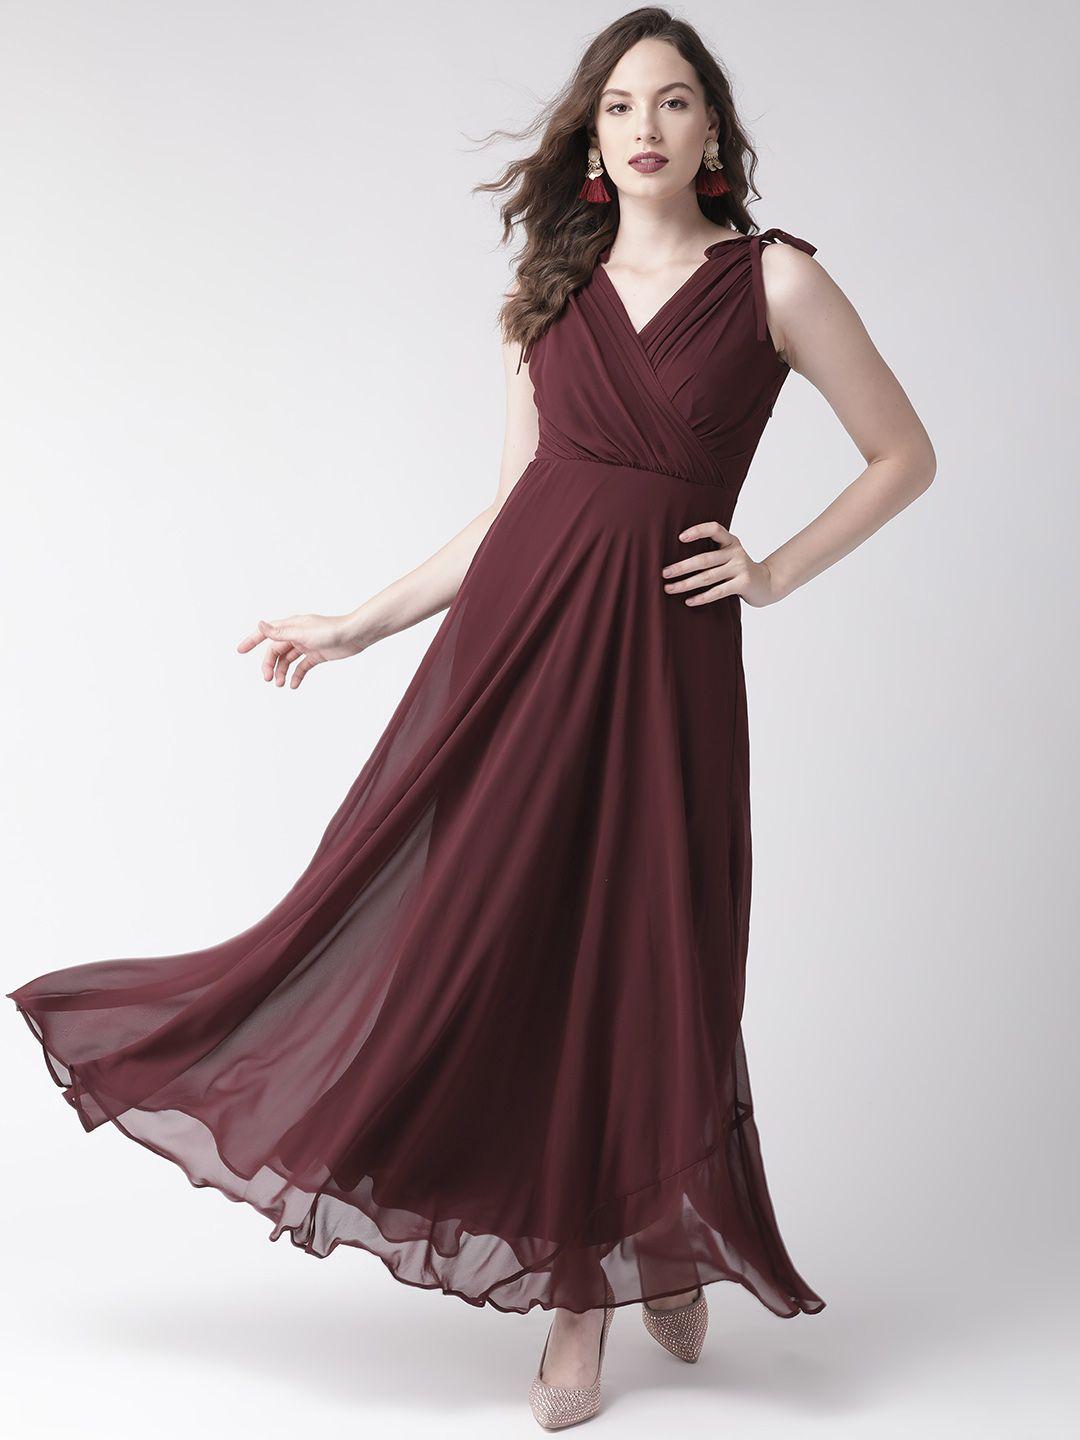 20dresses women burgundy solid maxi dress